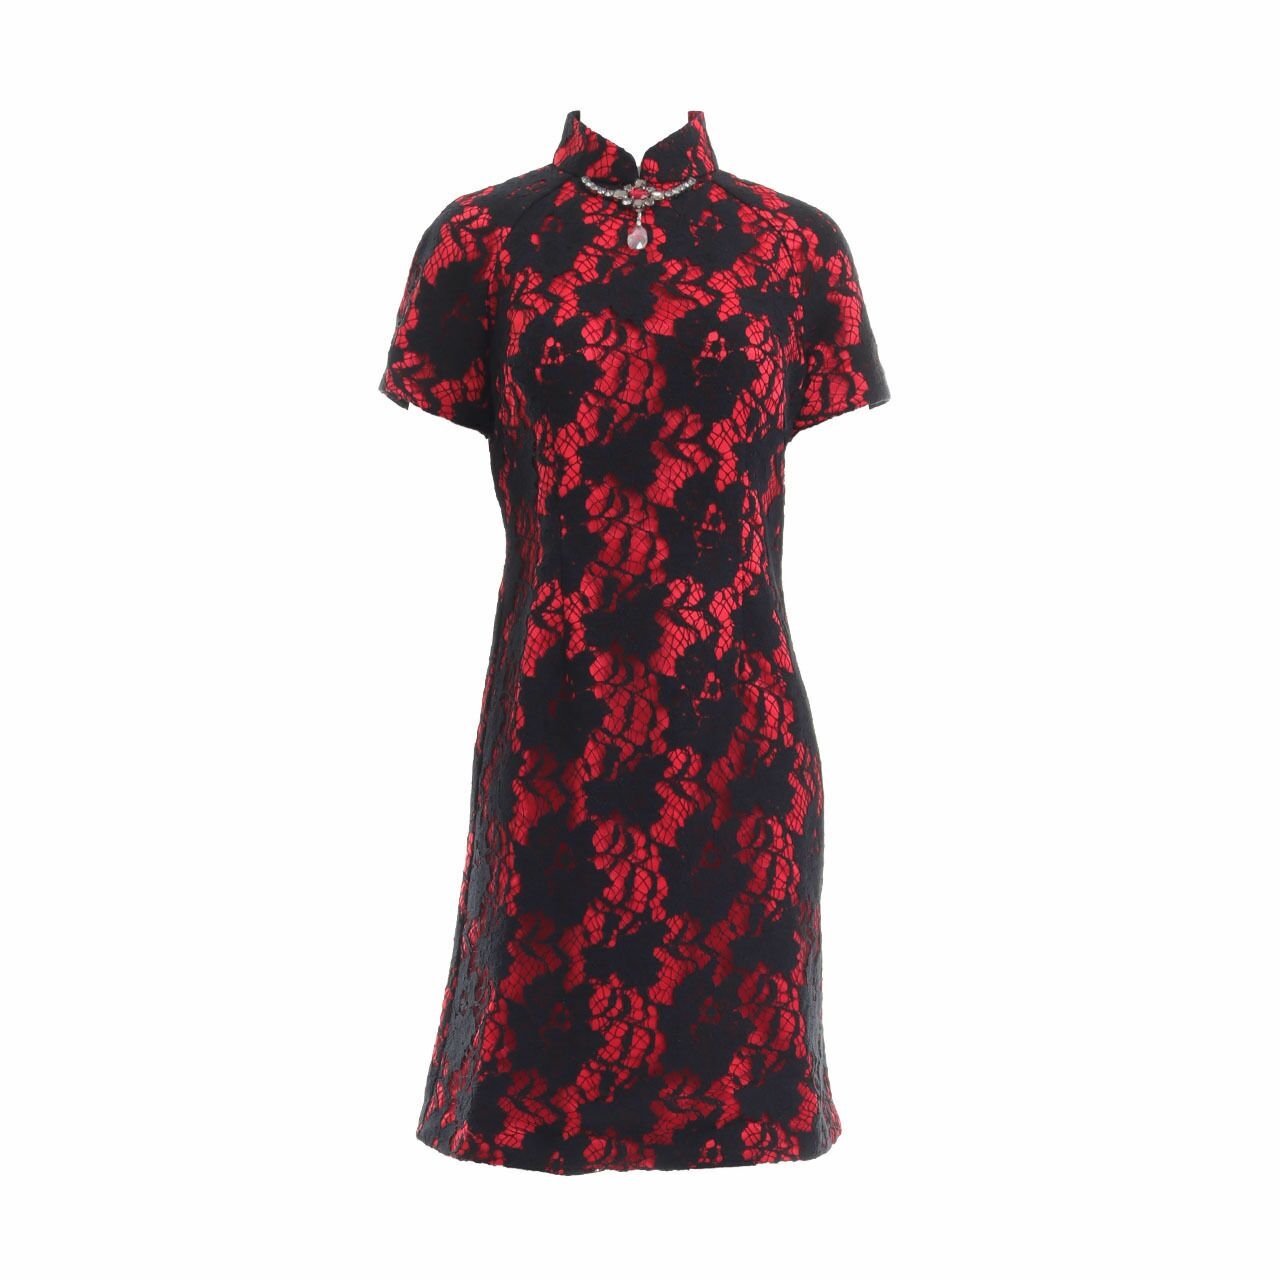 Shanghai Tang Black & Red Mini Dress